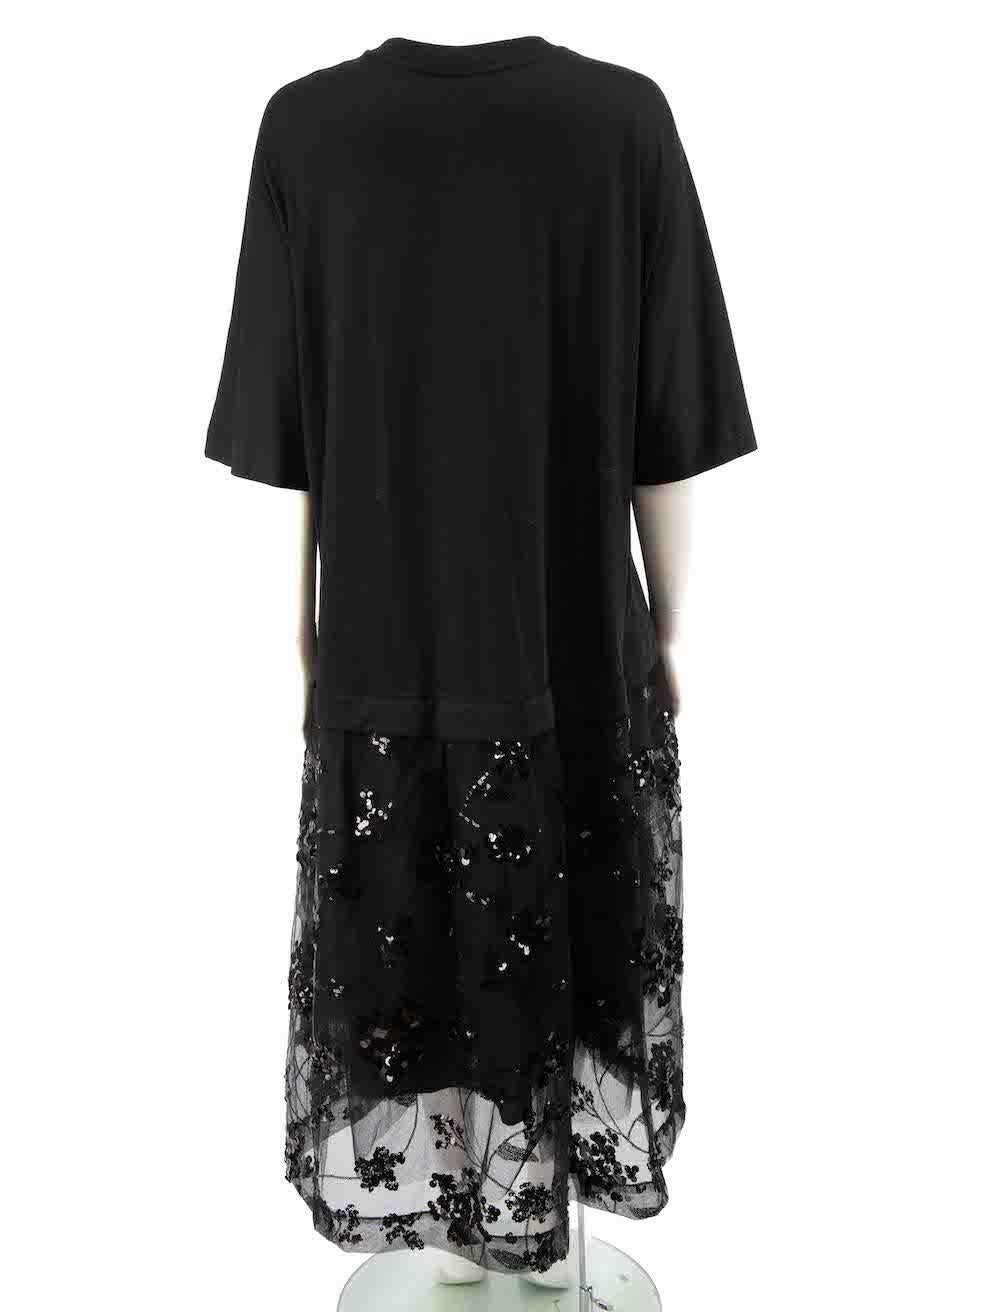 Simone Rocha Black Floral Sequin Midi Dress Size XS In Excellent Condition For Sale In London, GB